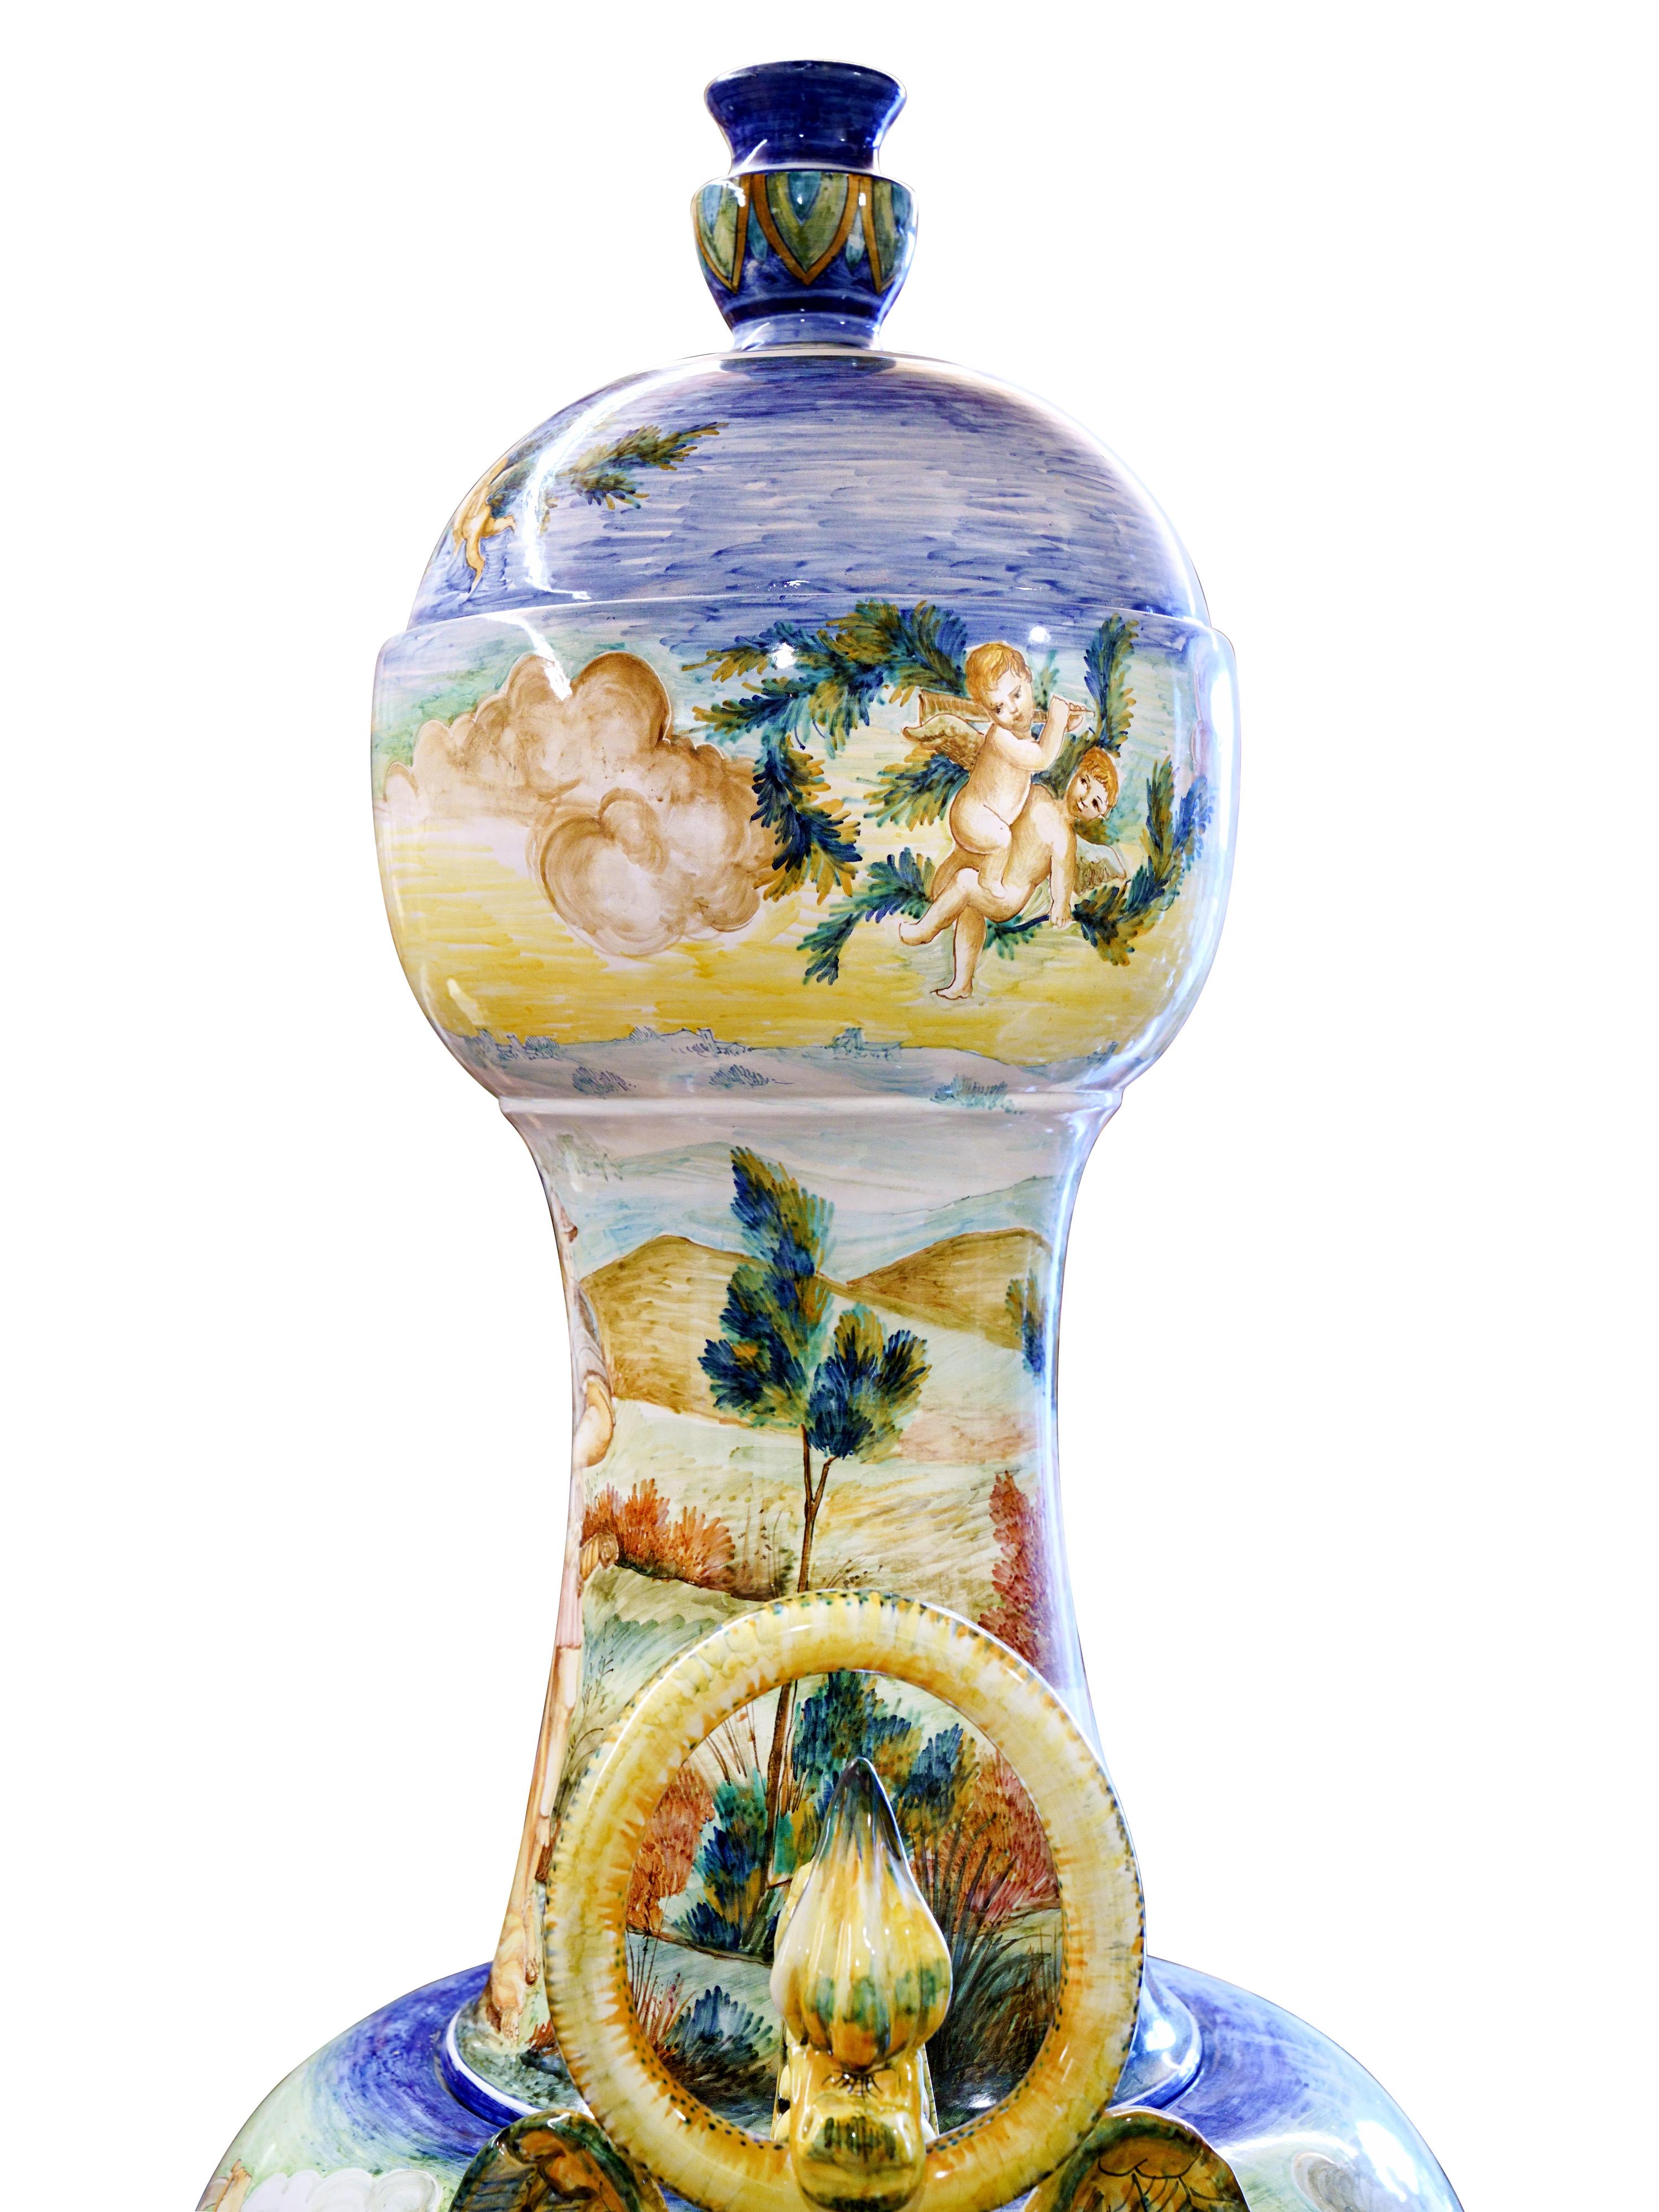 Majestic Amphora Vase Majolica Painted Subject Inspired by Leonardo Da Vinci In Excellent Condition For Sale In Recanati, IT